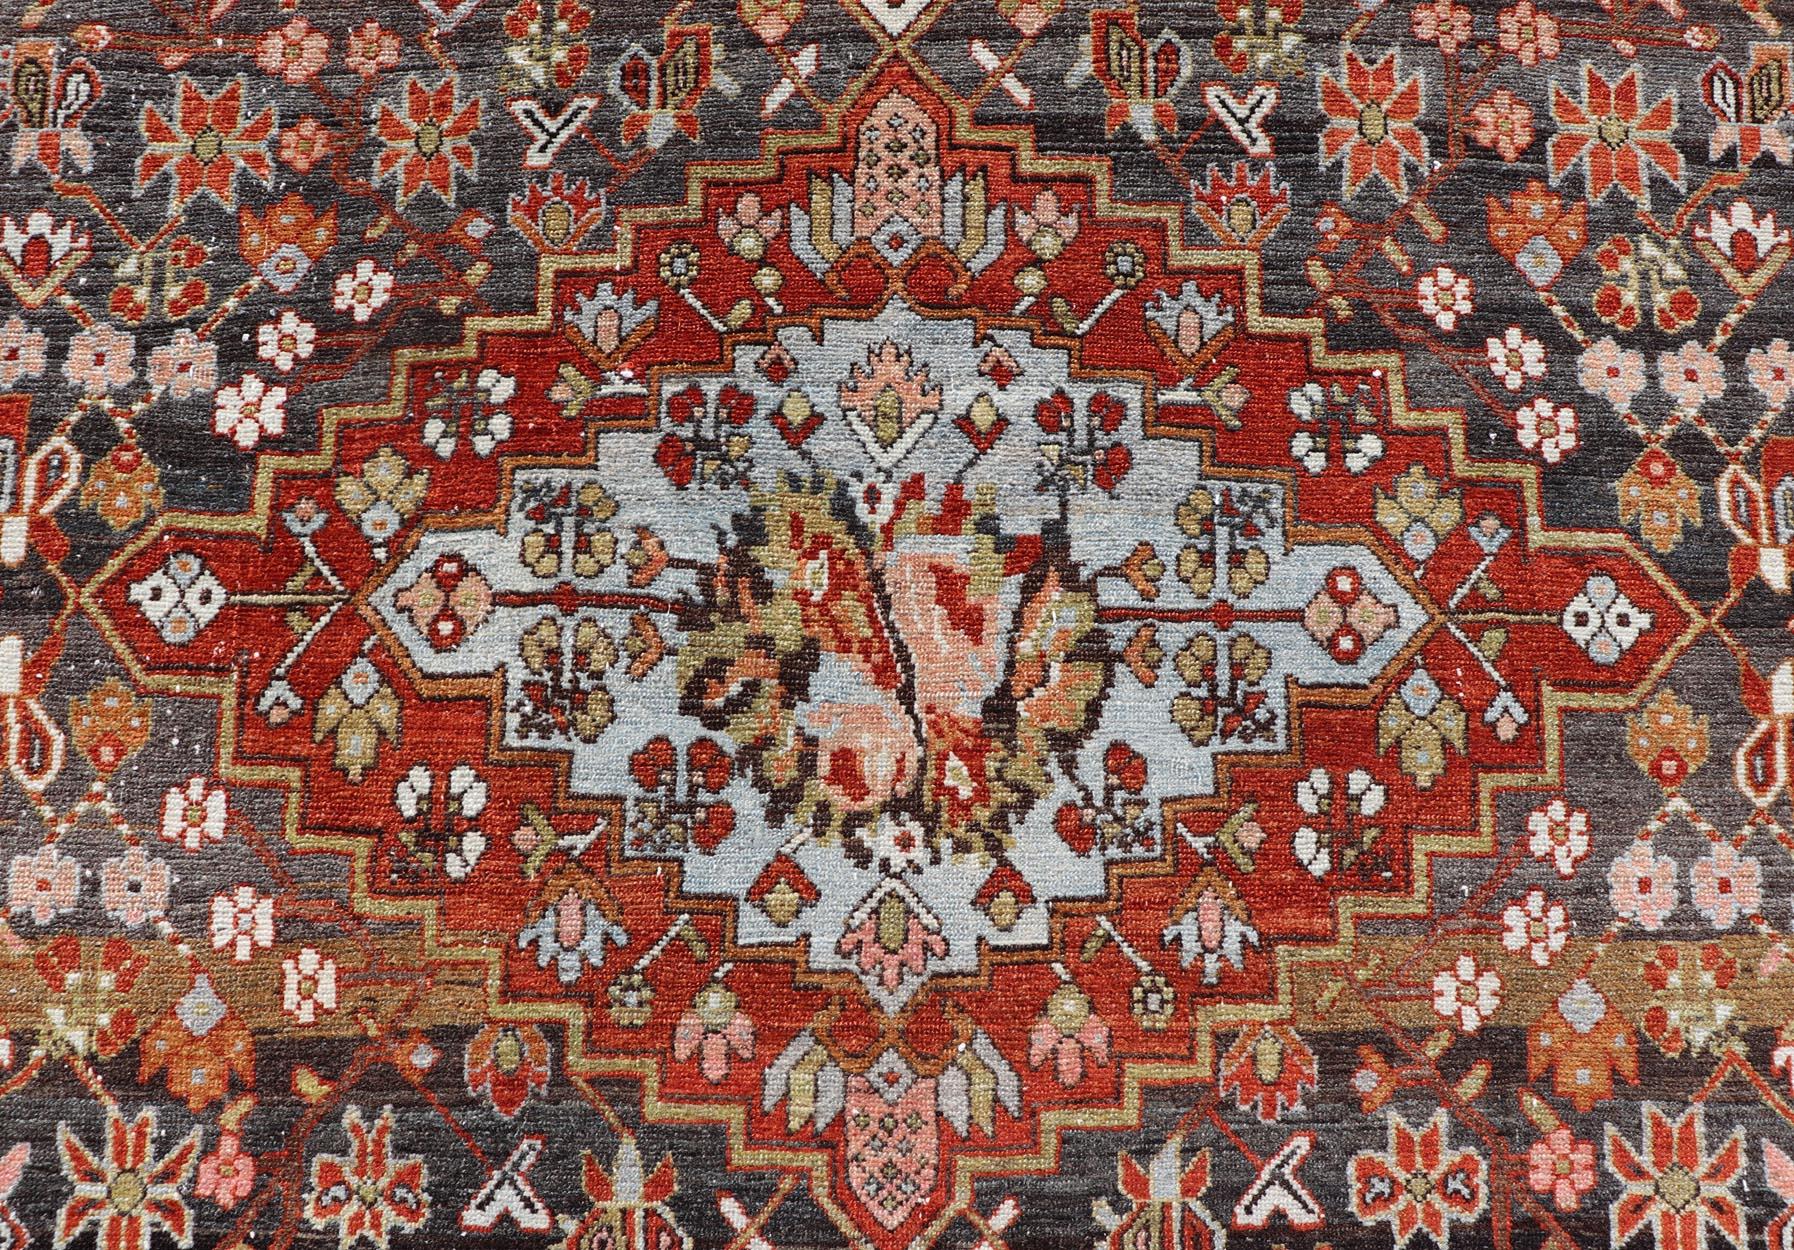 Wool Antique Persian Tribal Design Bakhtiari Rug in Multi Colors By Keivan Woven Arts For Sale